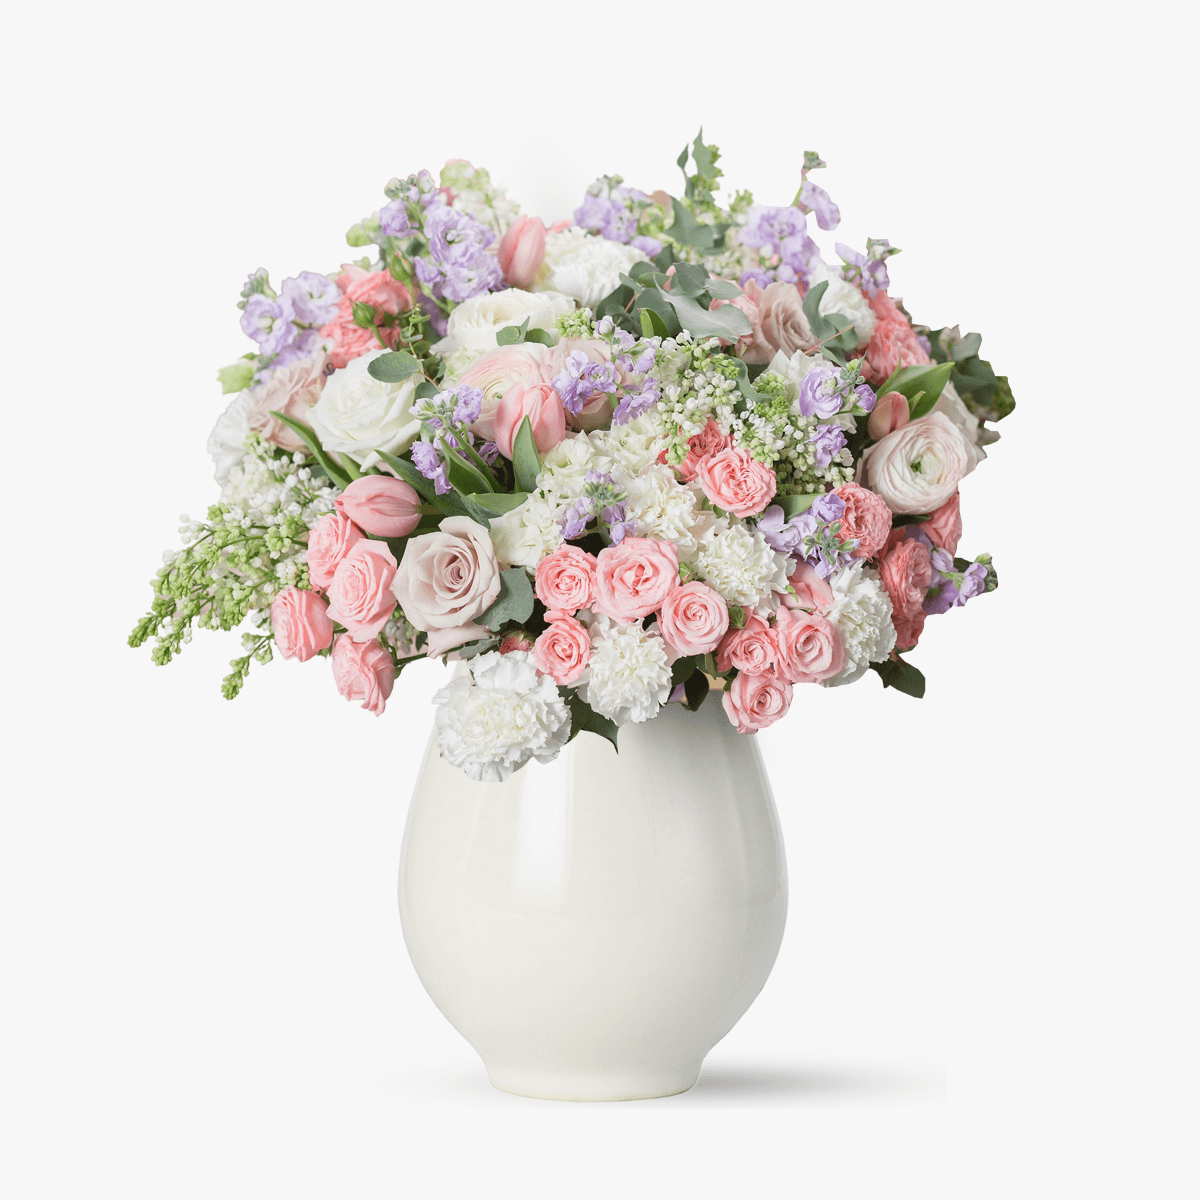 Buchet de flori cu 10 mattiola mov, 5 liliac alb, 10 trandafiri mixt, 10 dianthus alb, 5 sprayroses roz Prospetime de vara